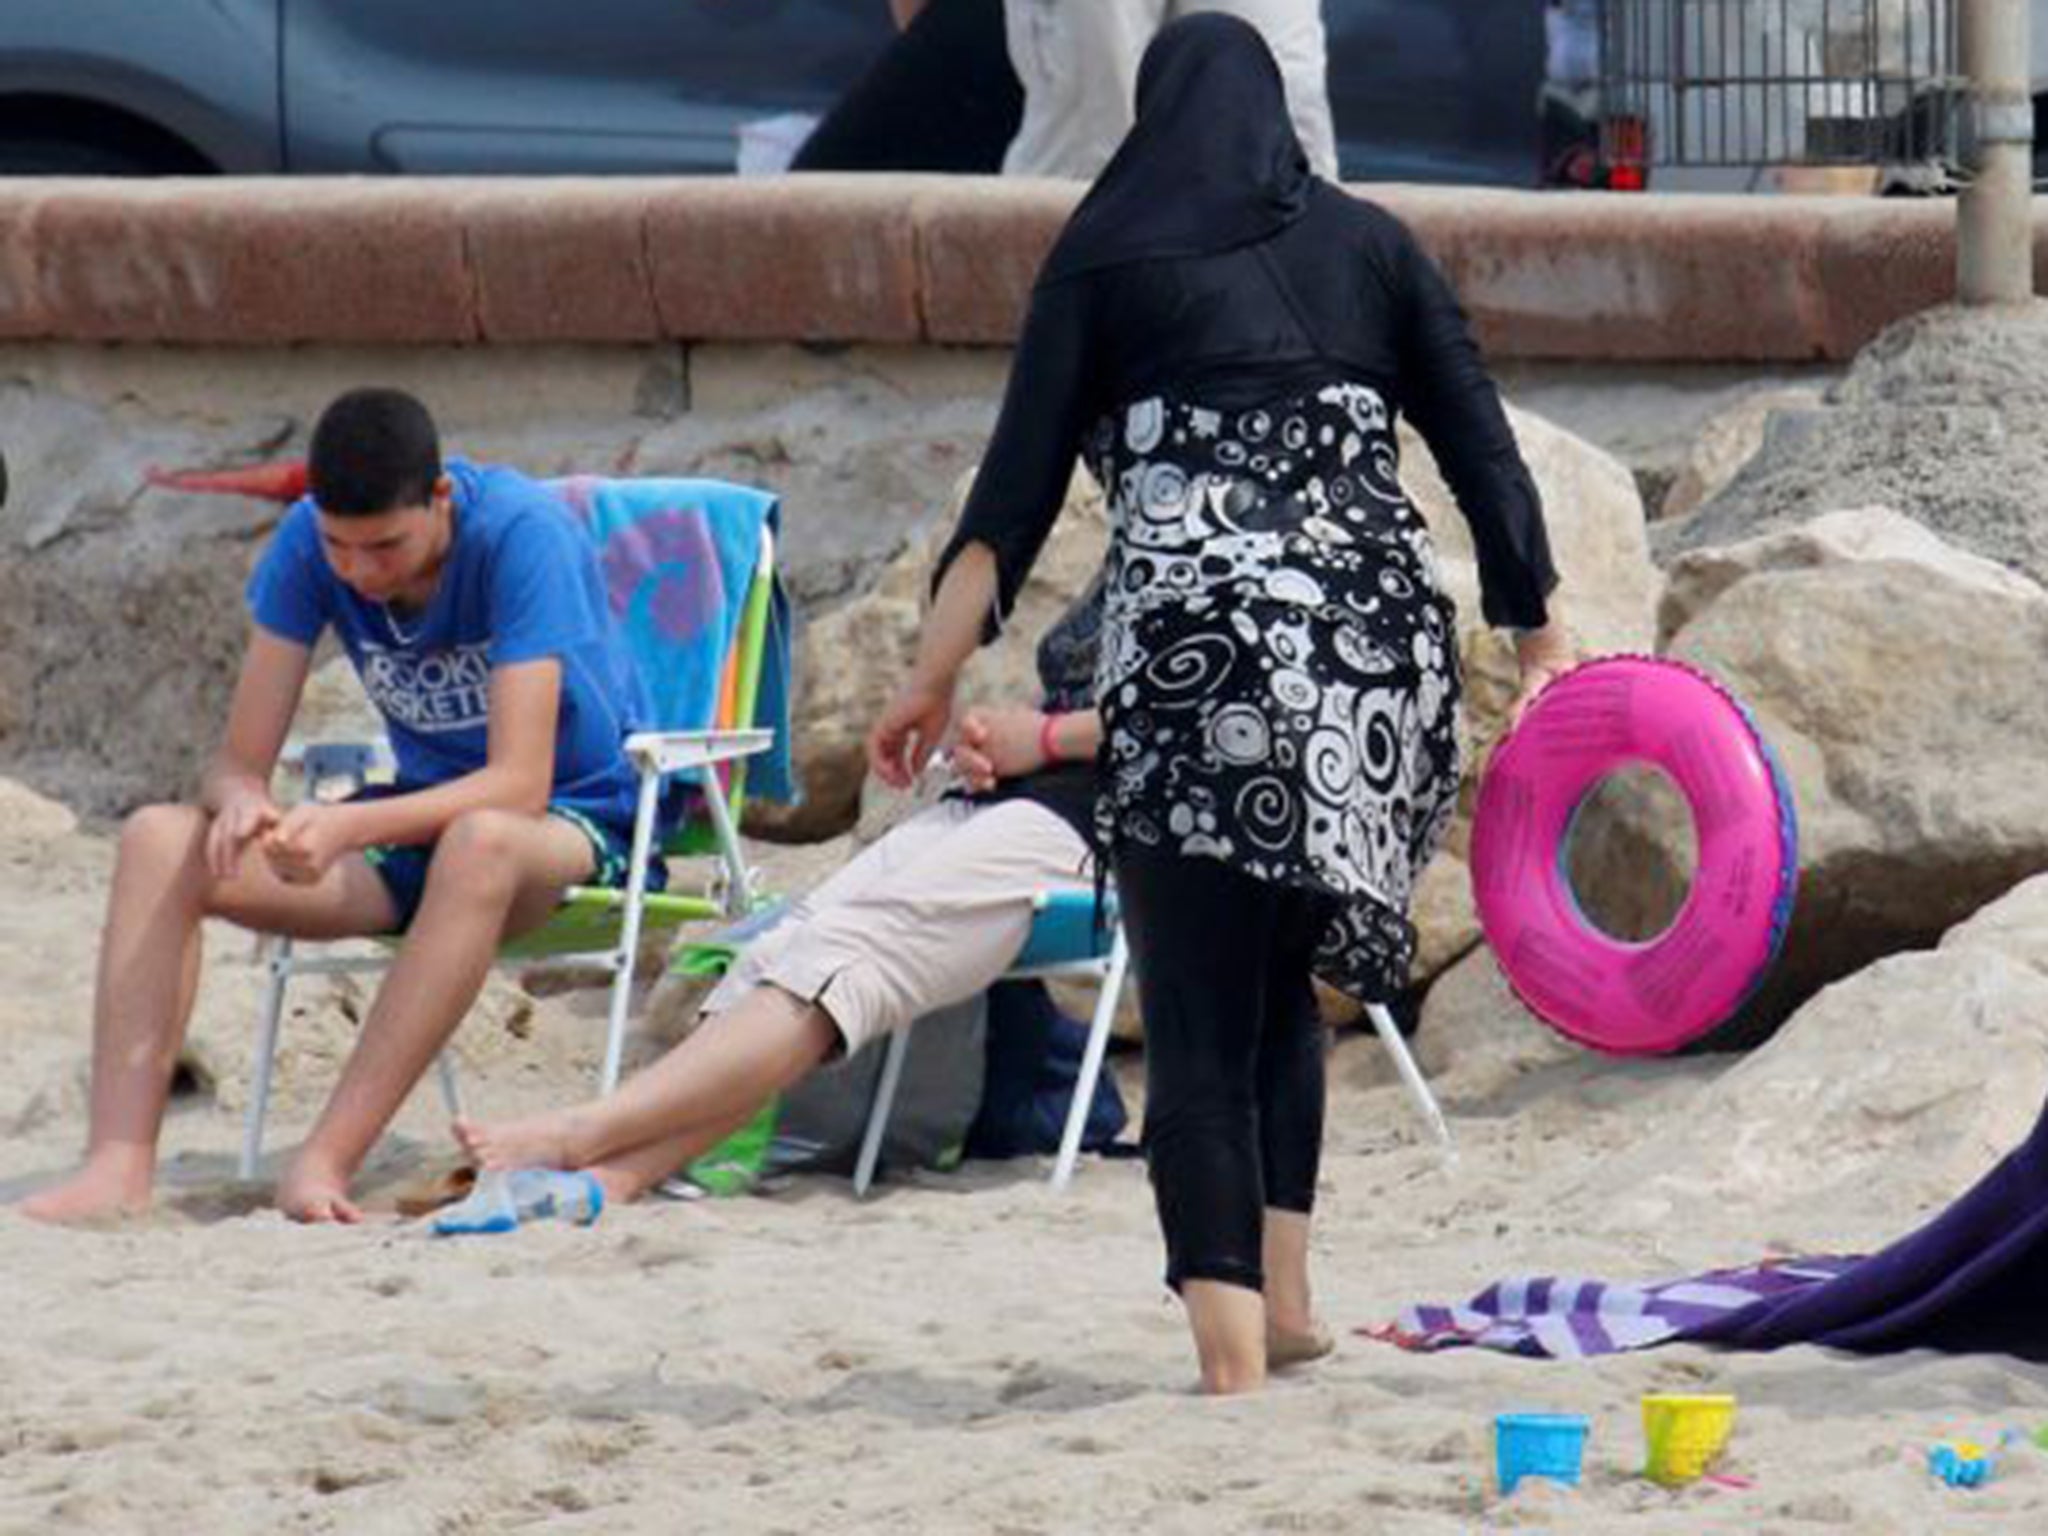 A woman wears a burkini on a beach in Marseille